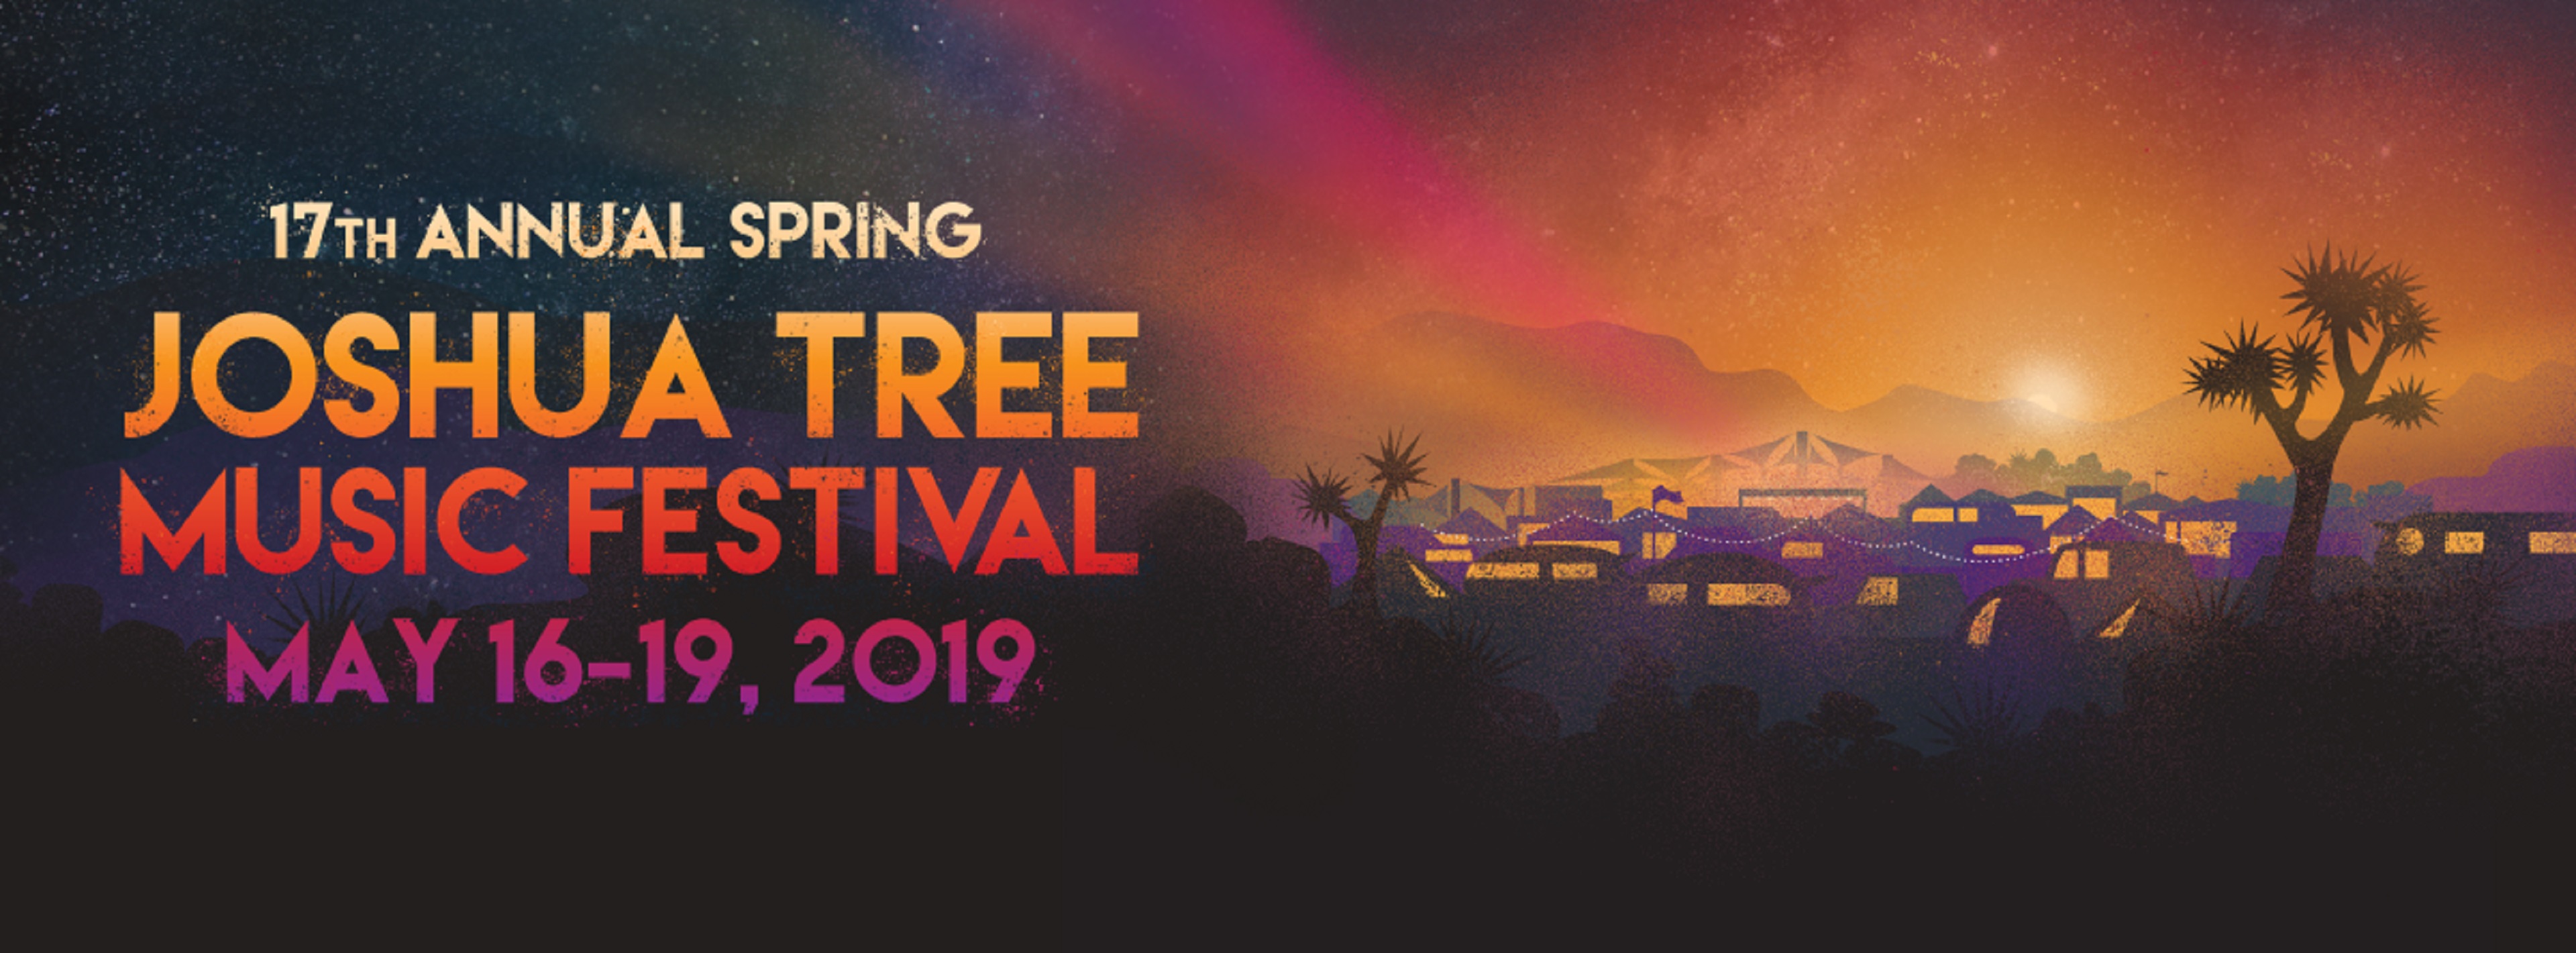 Joshua Tree Music Festival Announce Initial 2019 LineUp